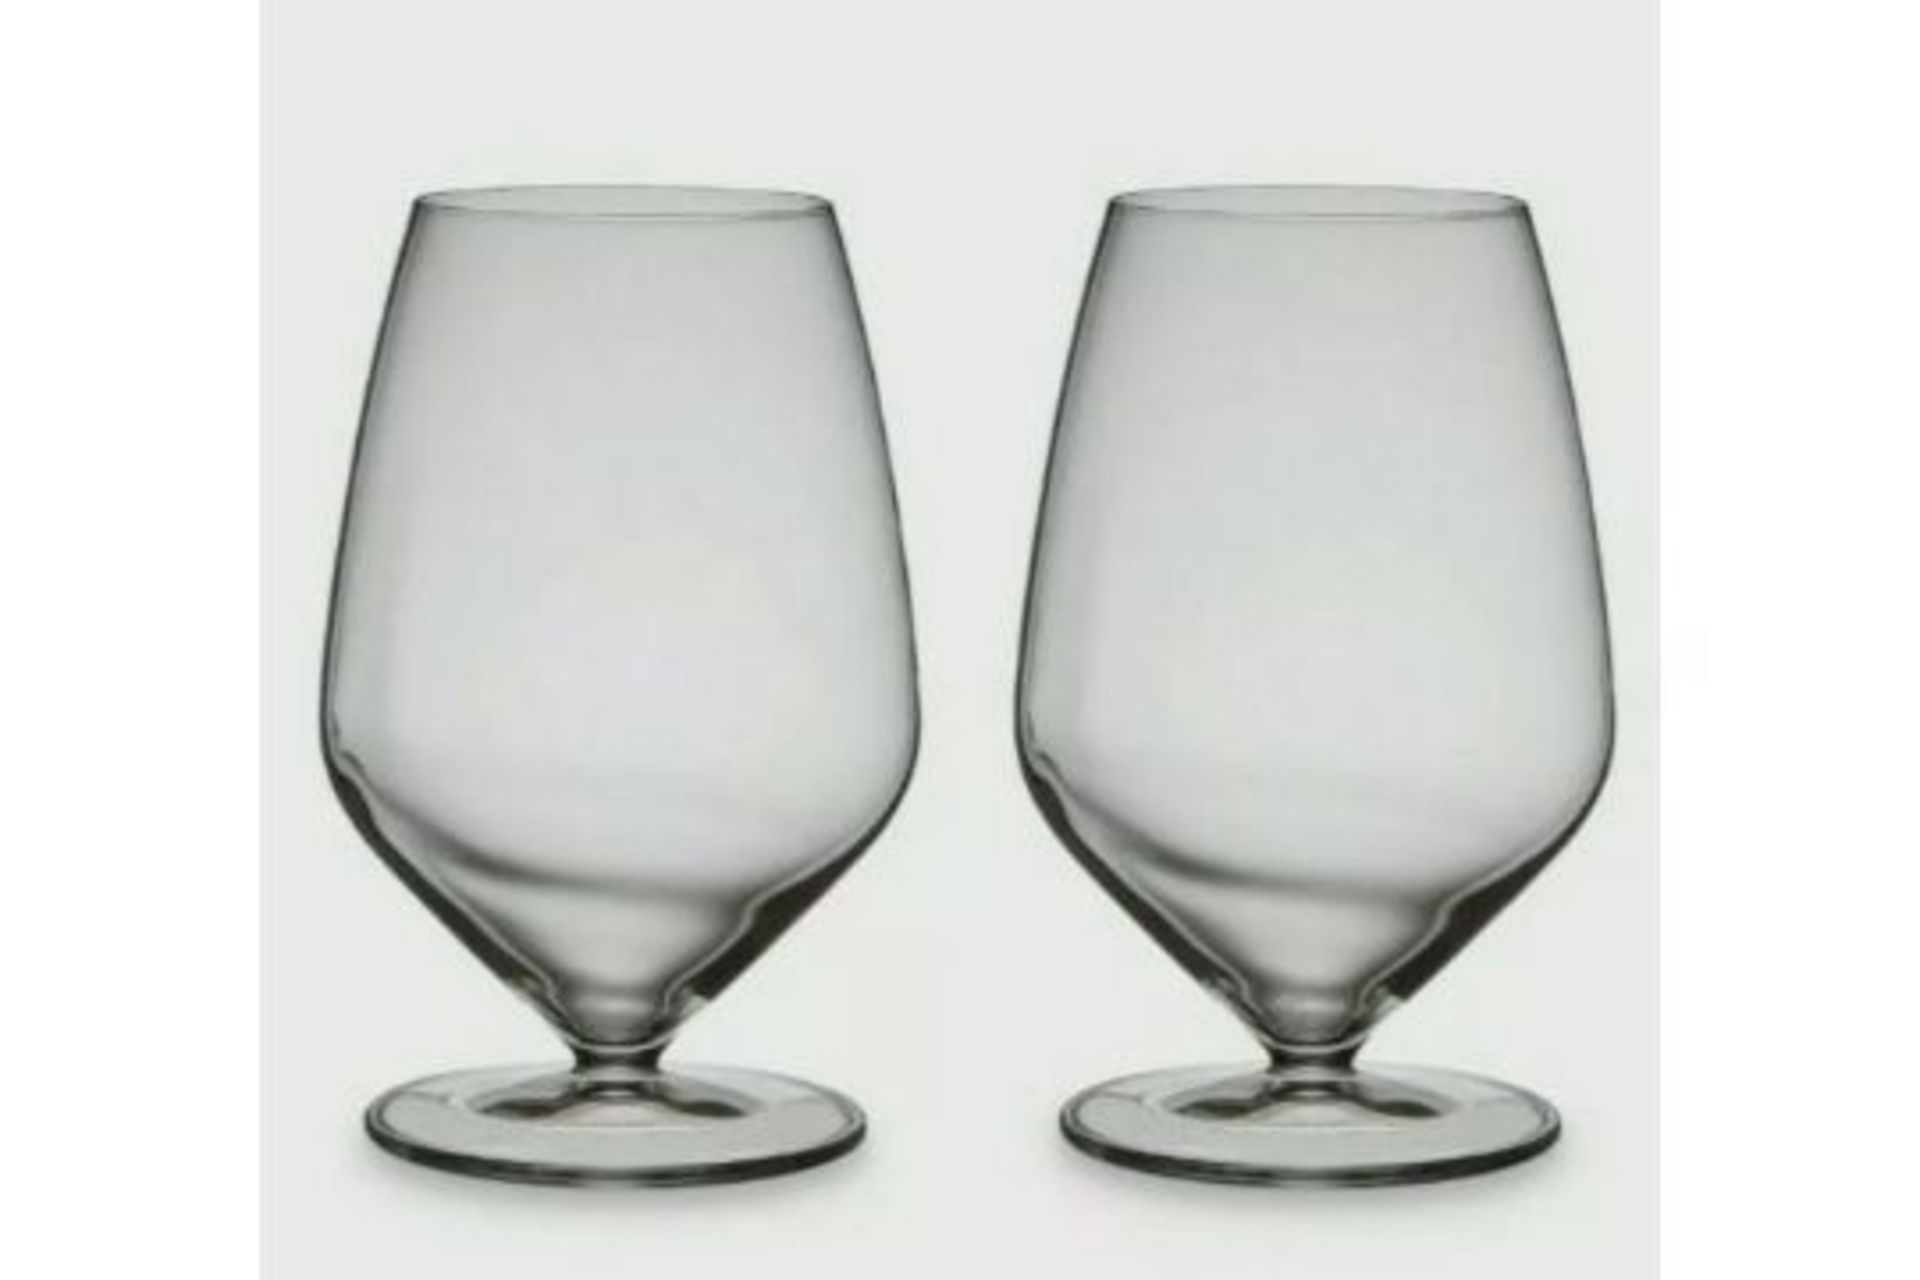 John Lewis Connoisseur For Beer, 700ml Beer Glasses, Set of 2, Crystal Glass - RRP £19.99.